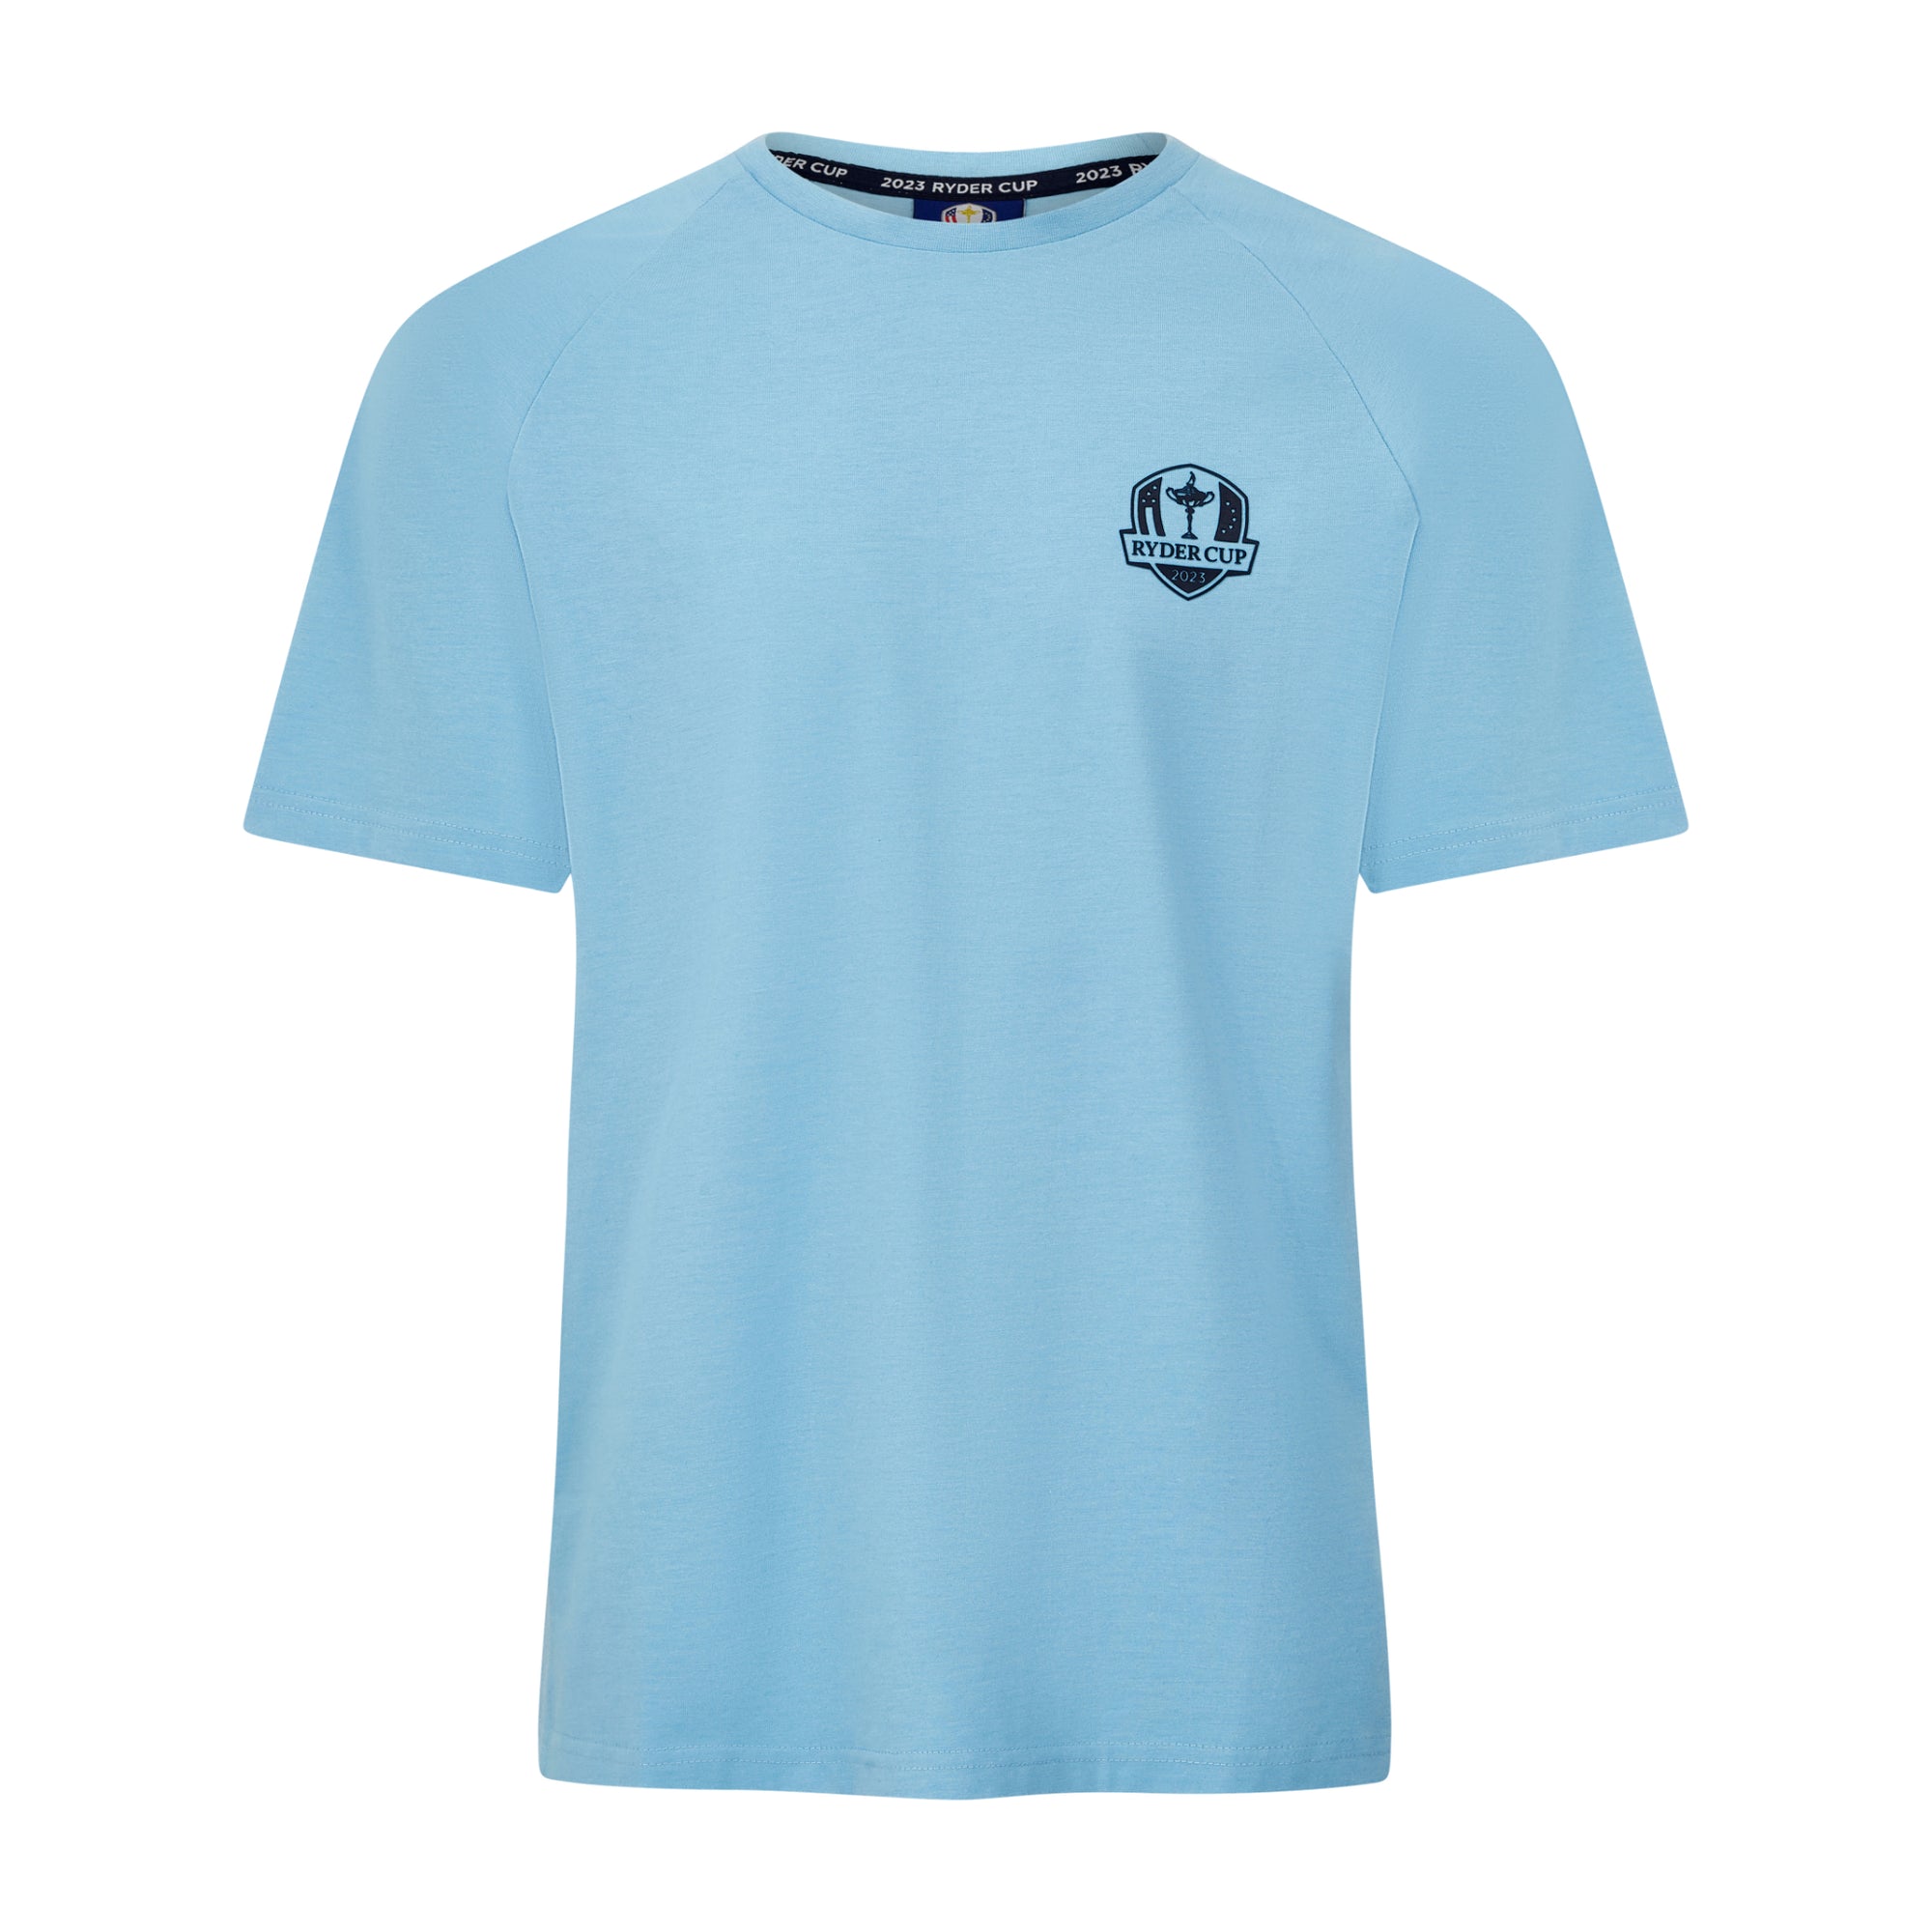 2023 Ryder Cup Men's Sky Blue T-Shirt - Front